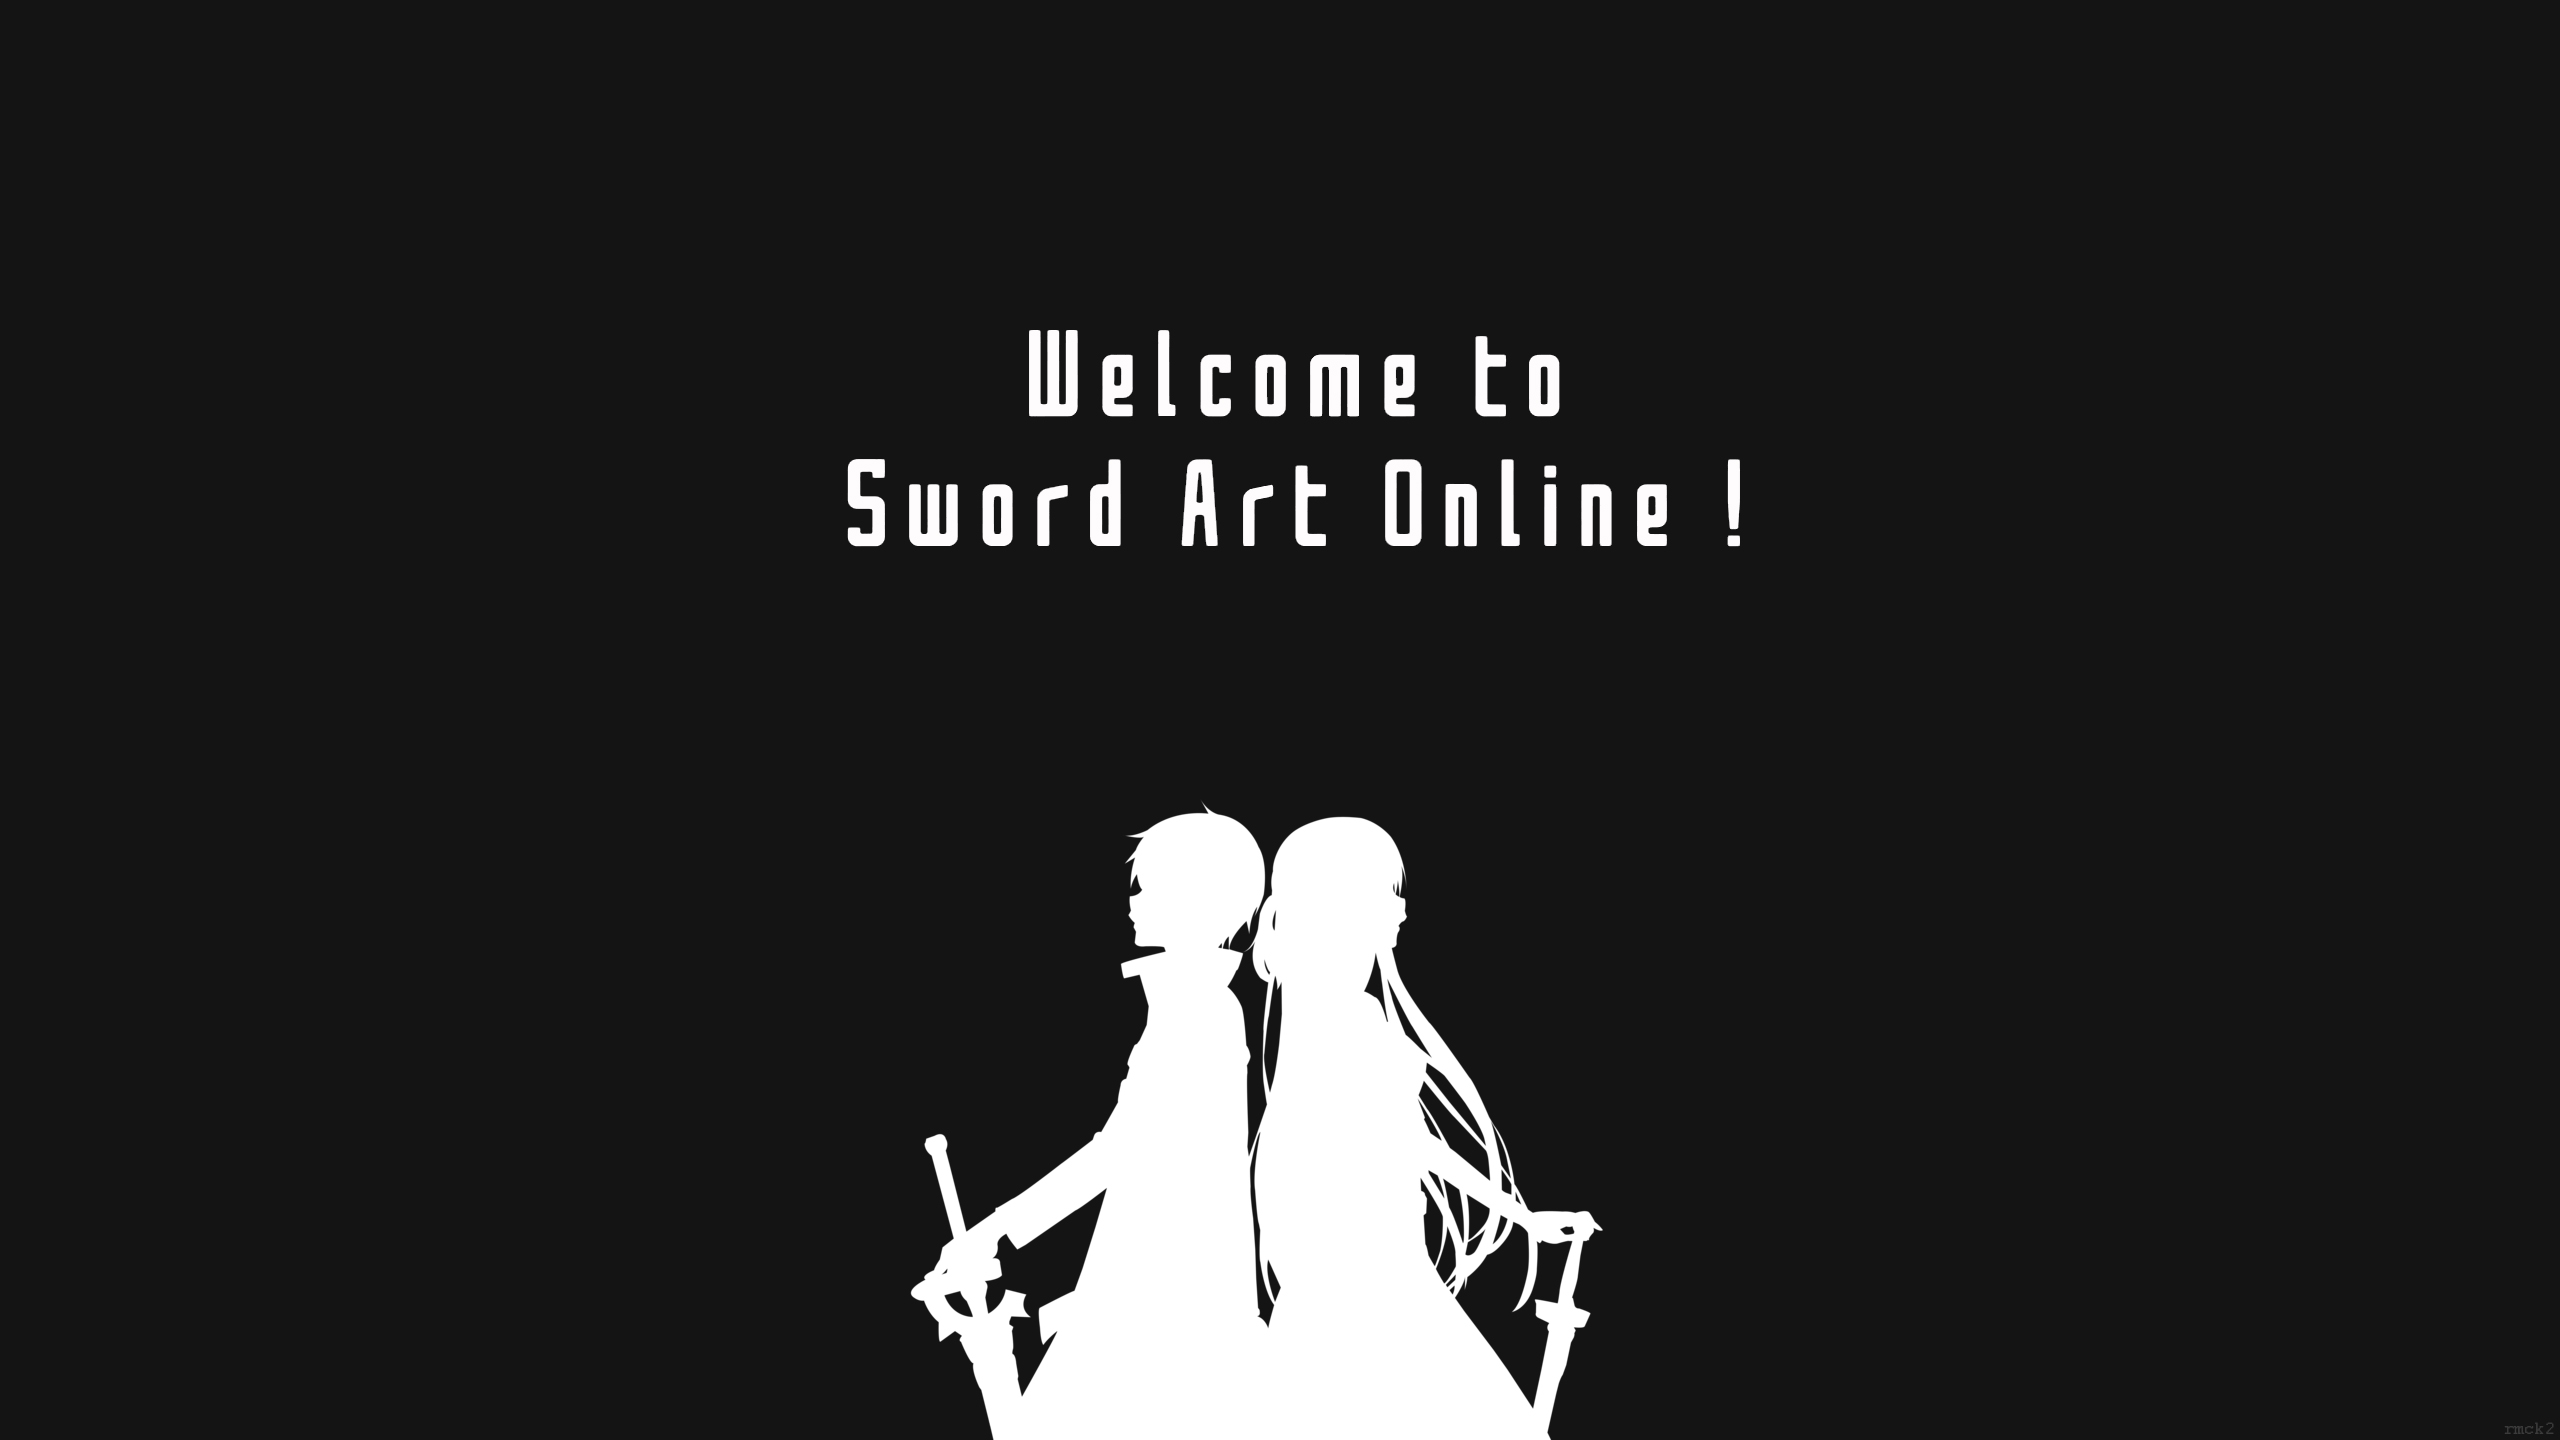 Eugeo wallpaper (sword art online) by Darkblood2004 on DeviantArt